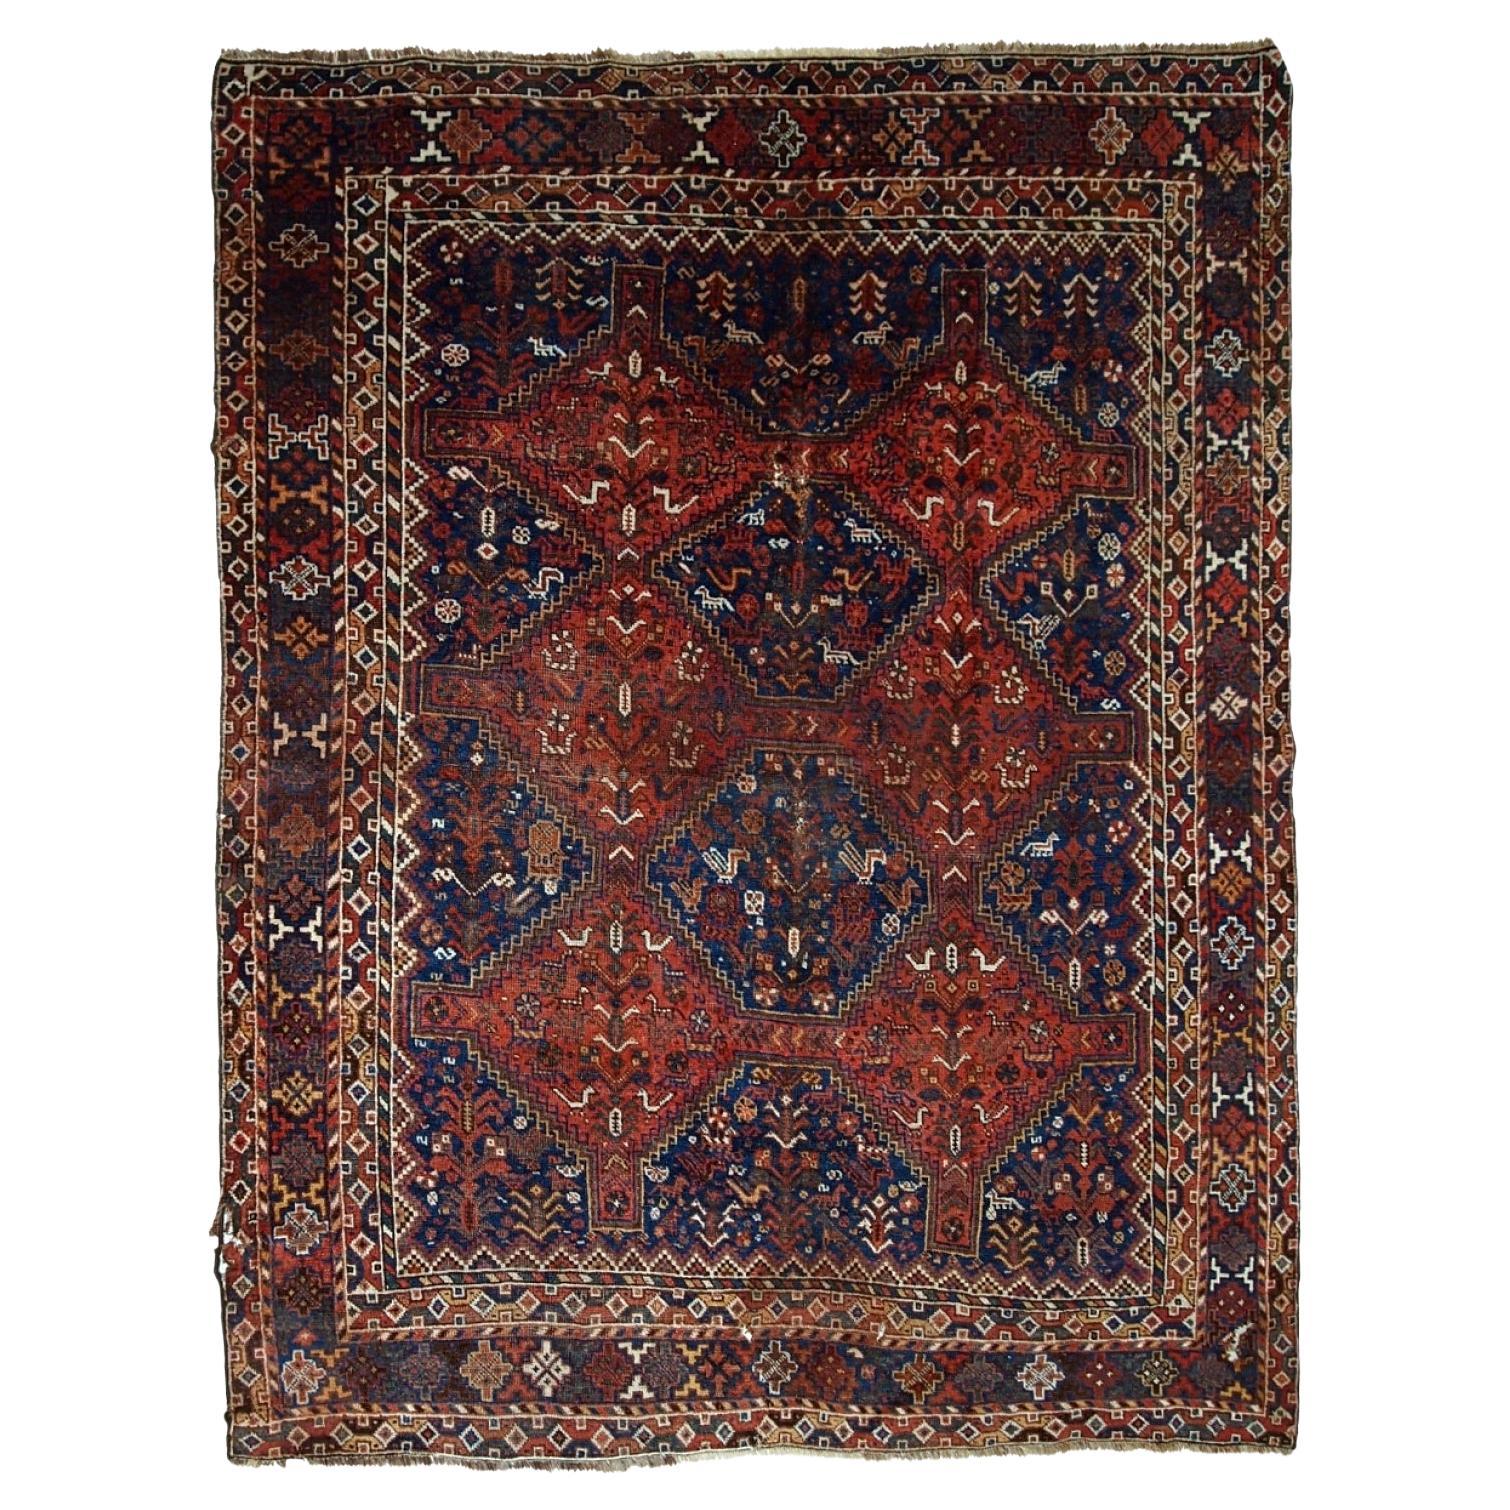 Handgefertigter antiker persischer Khamseh-Teppich, 1900er Jahre, 1C595